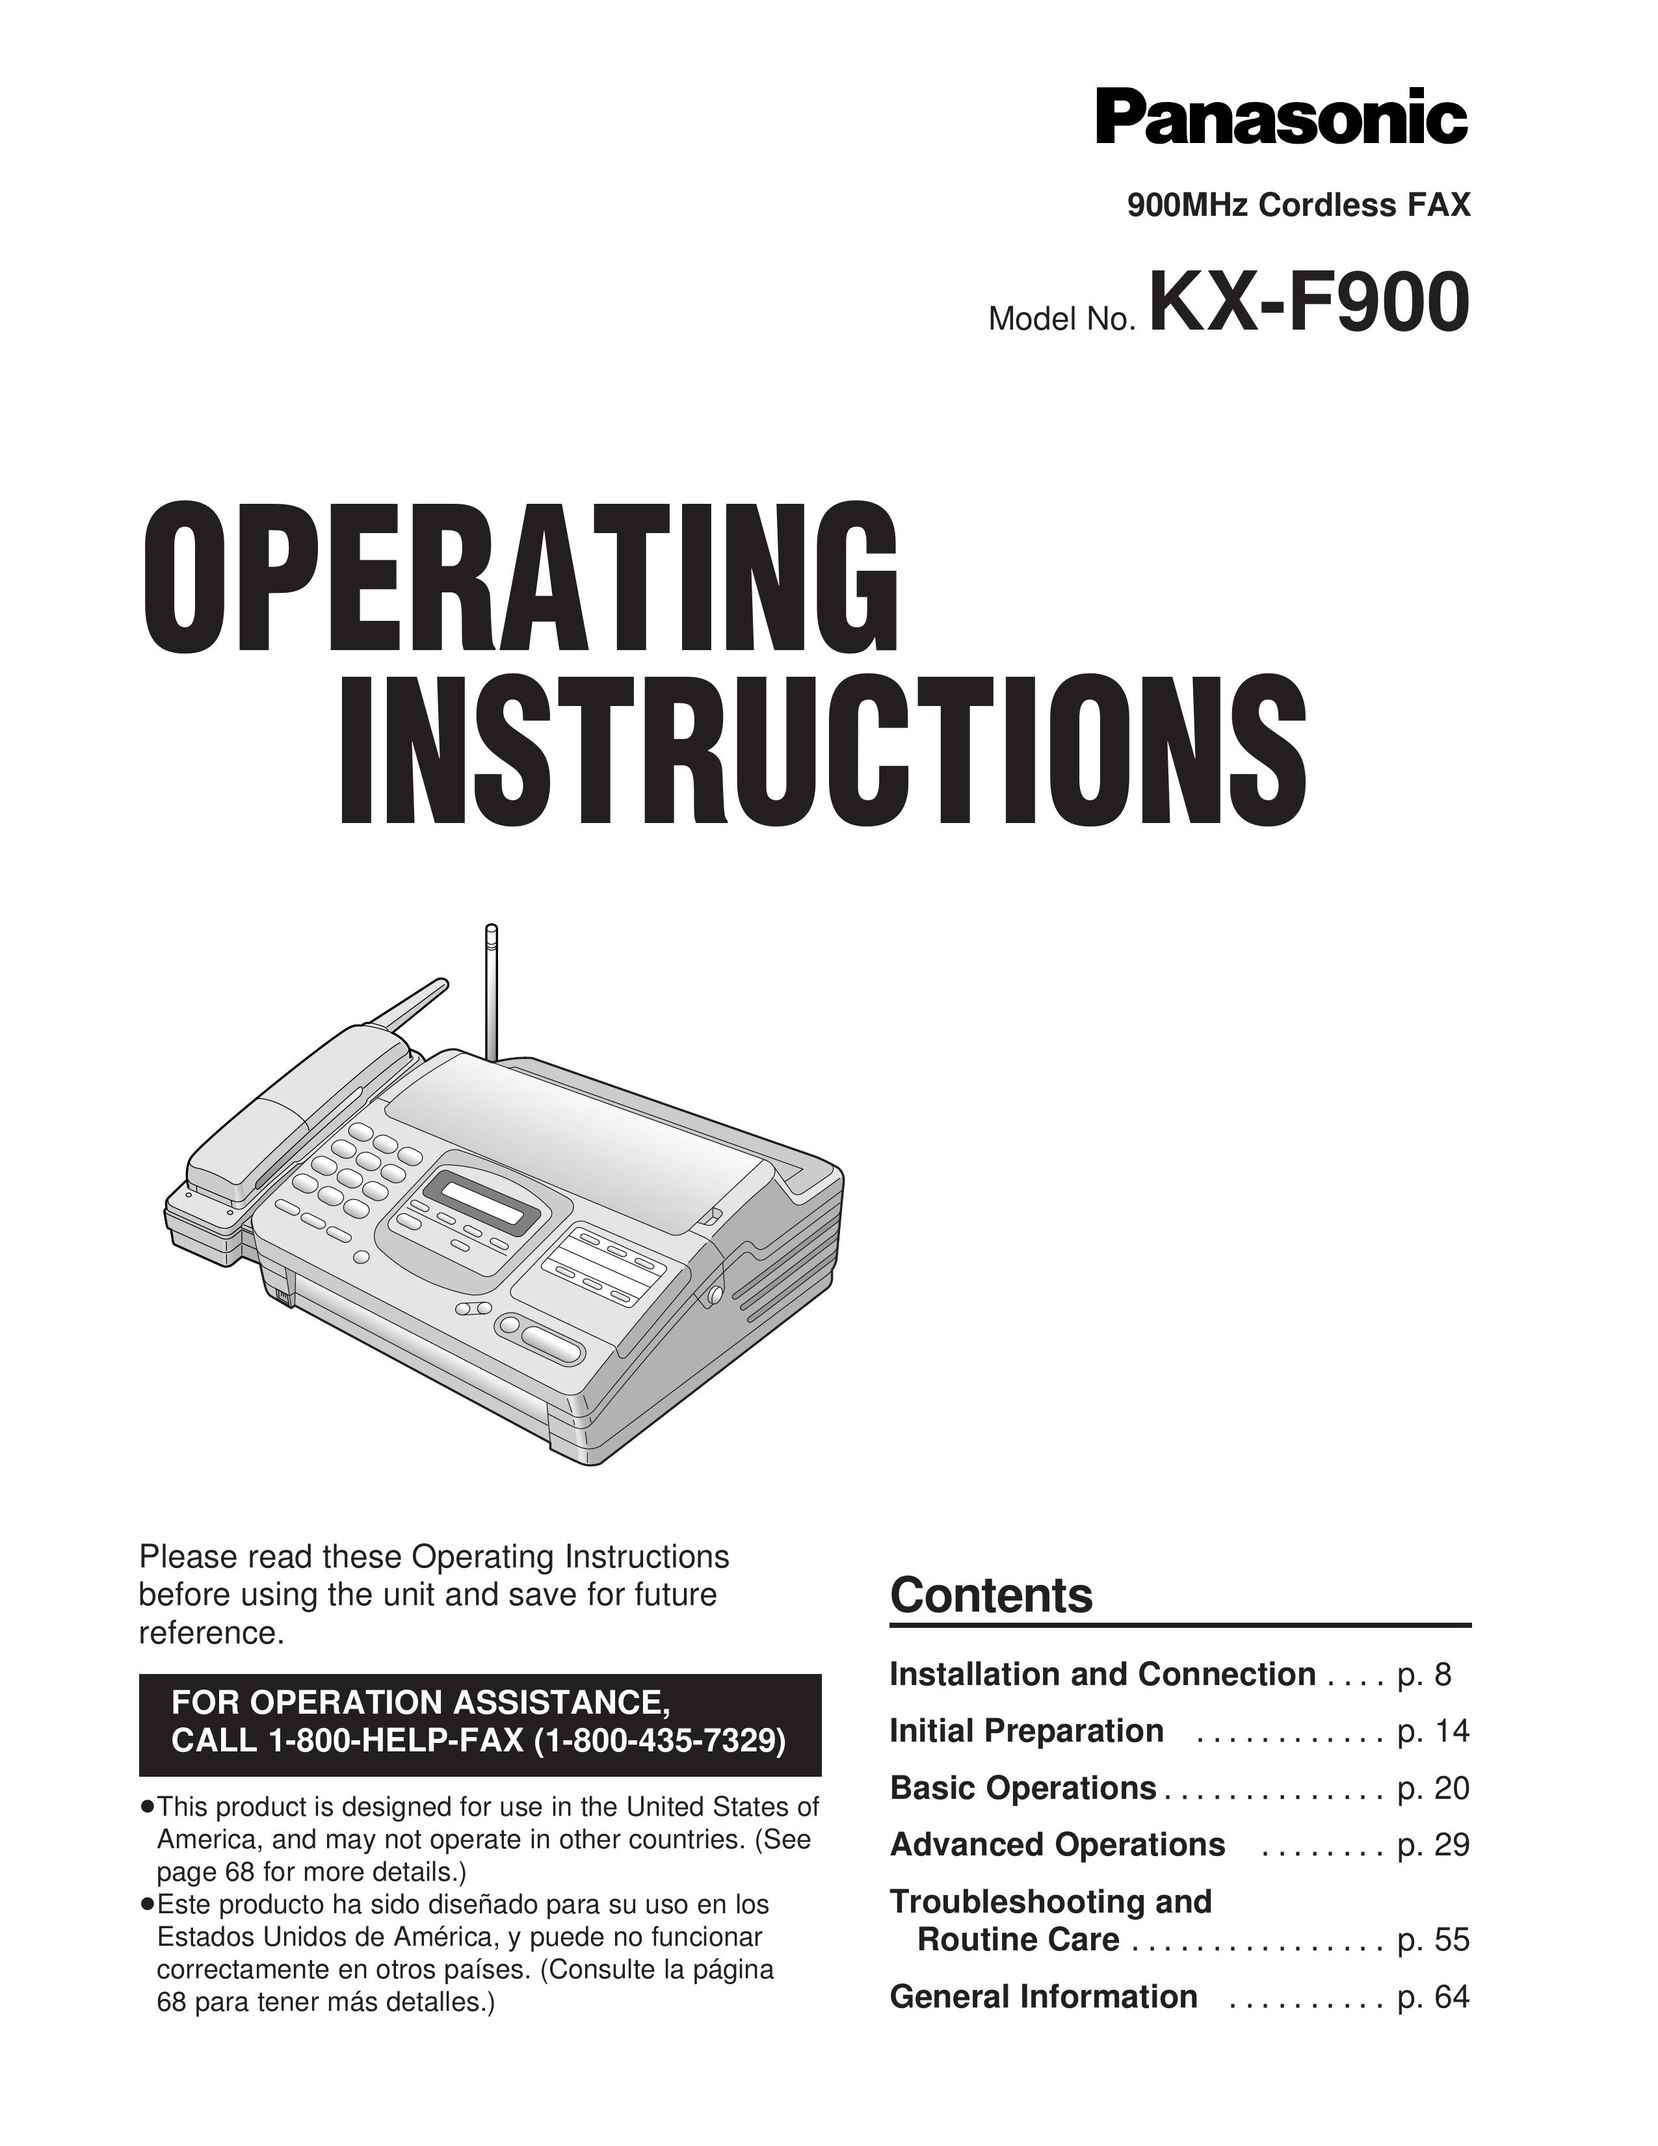 Panasonic KX-F900 Fax Machine User Manual